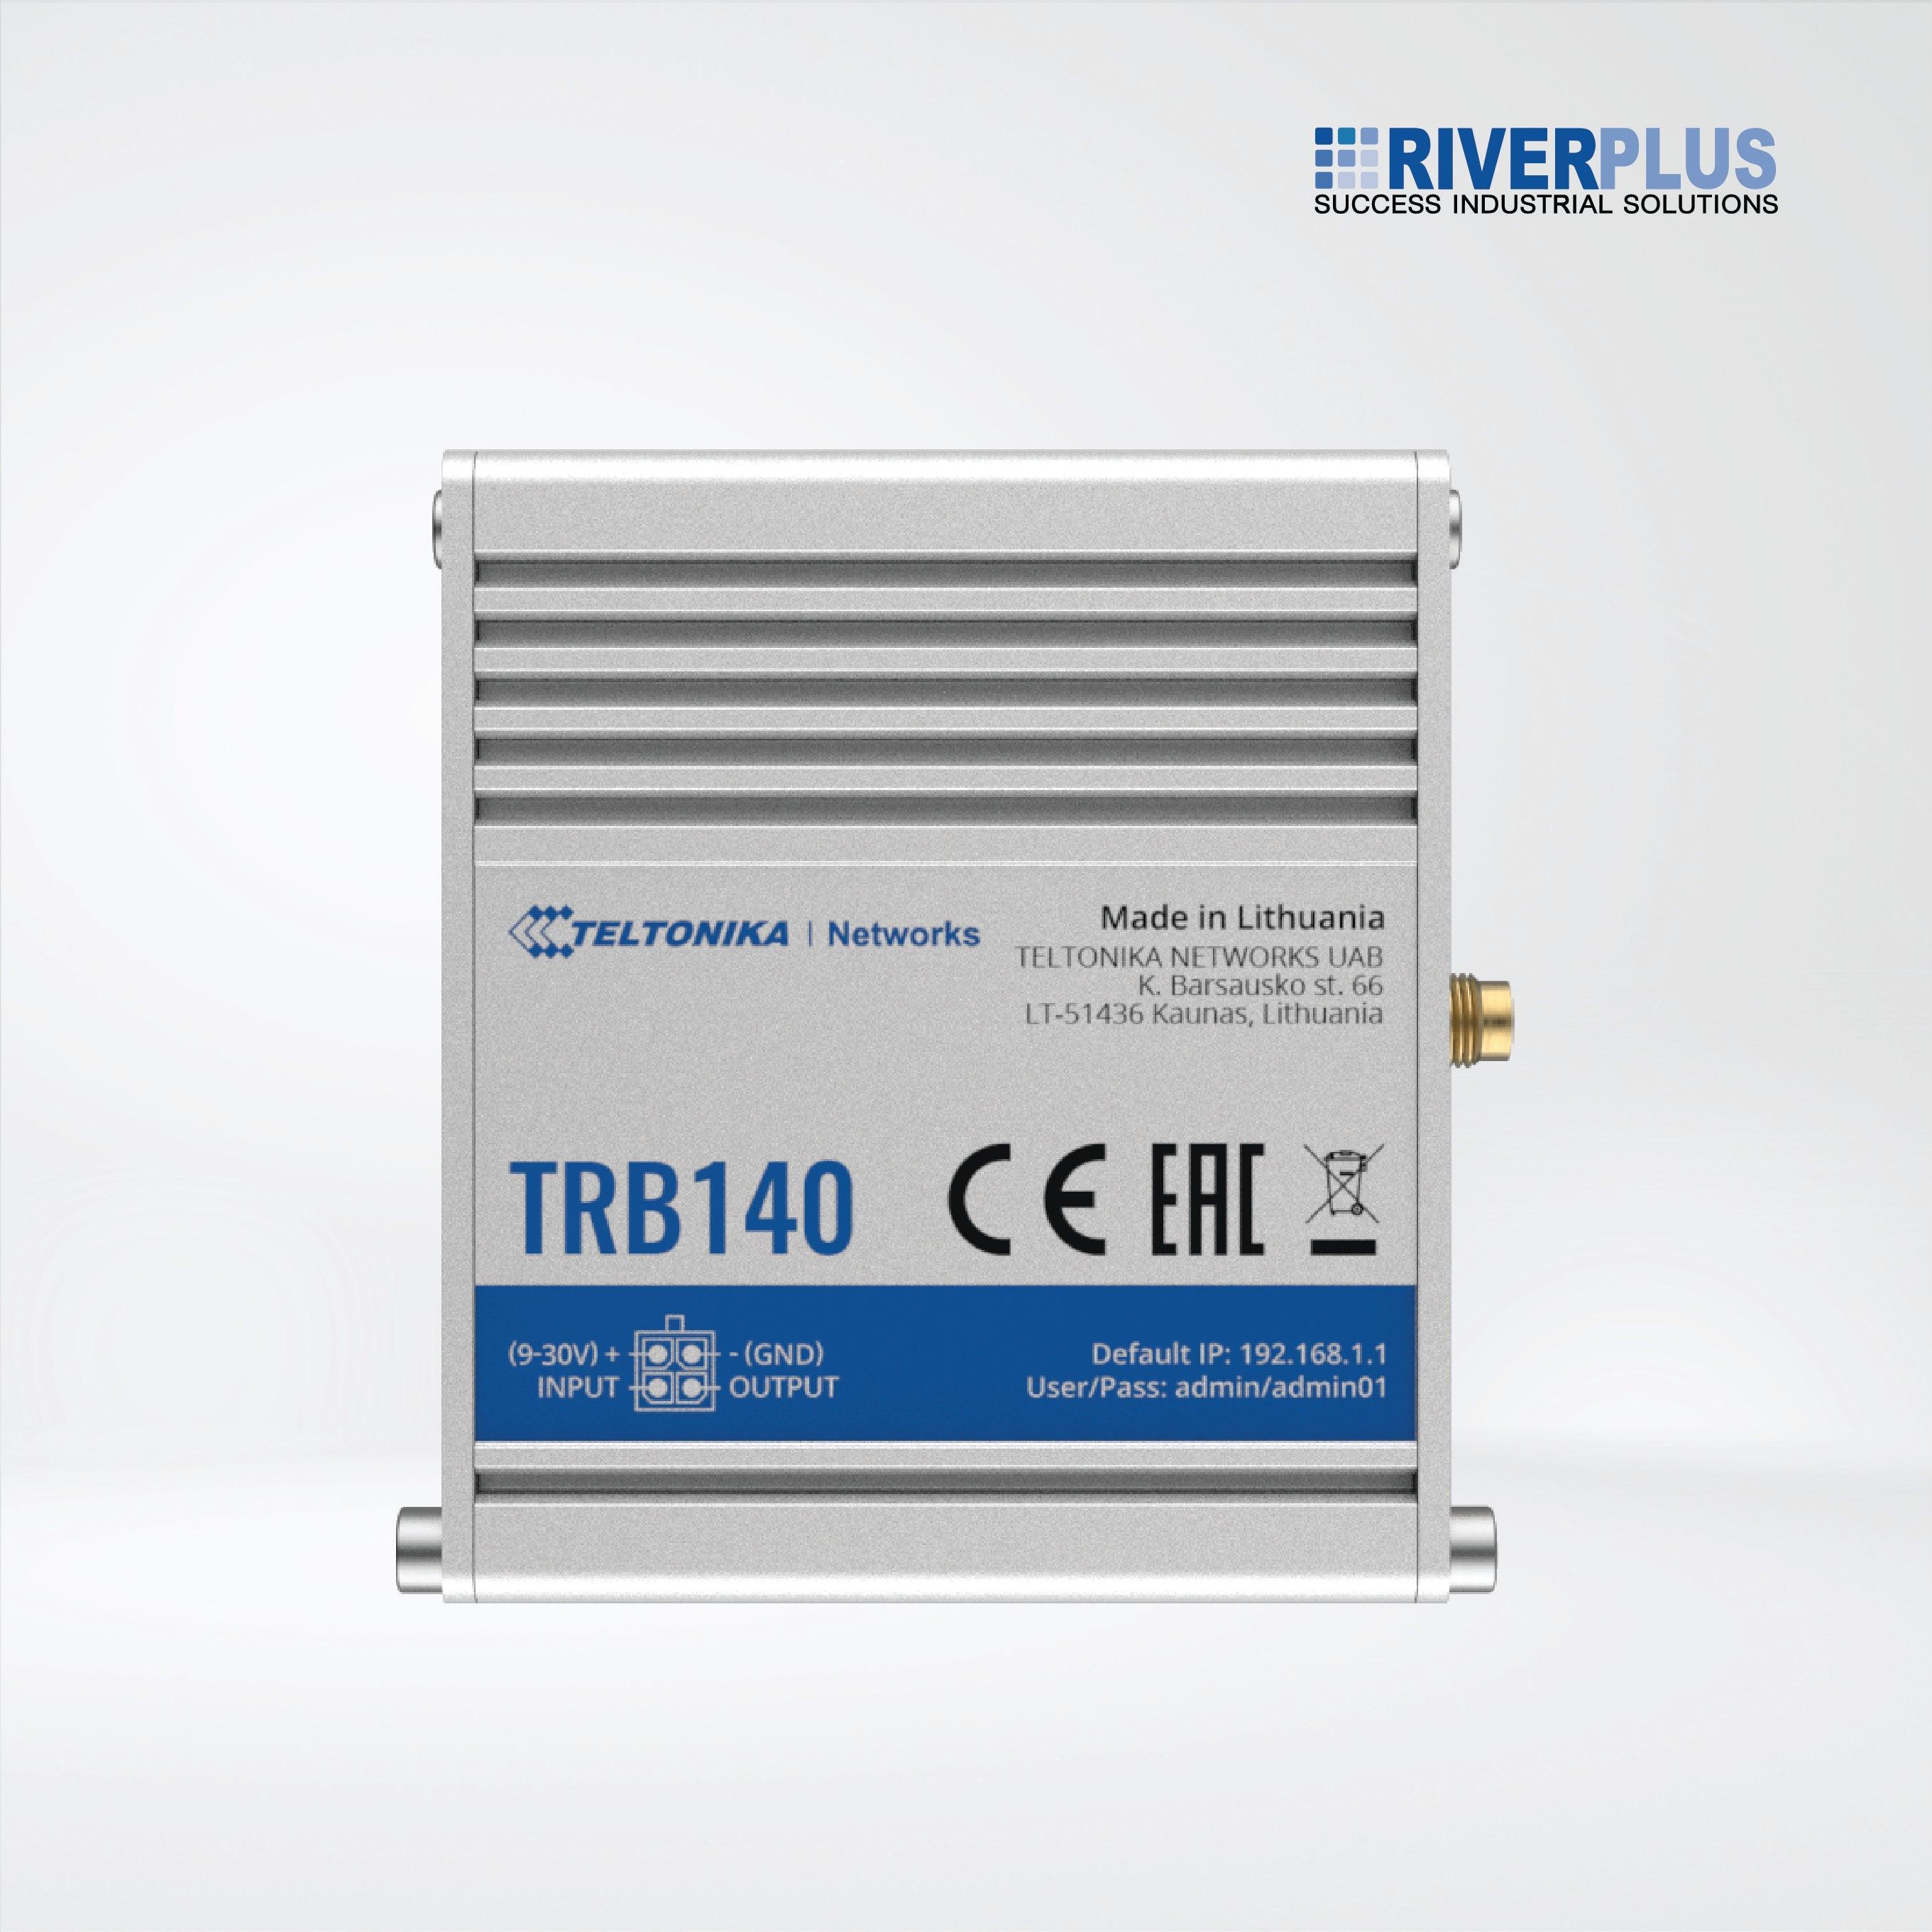 TRB140 - Industrial Ethernet to 4G LTE Gateway - Riverplus